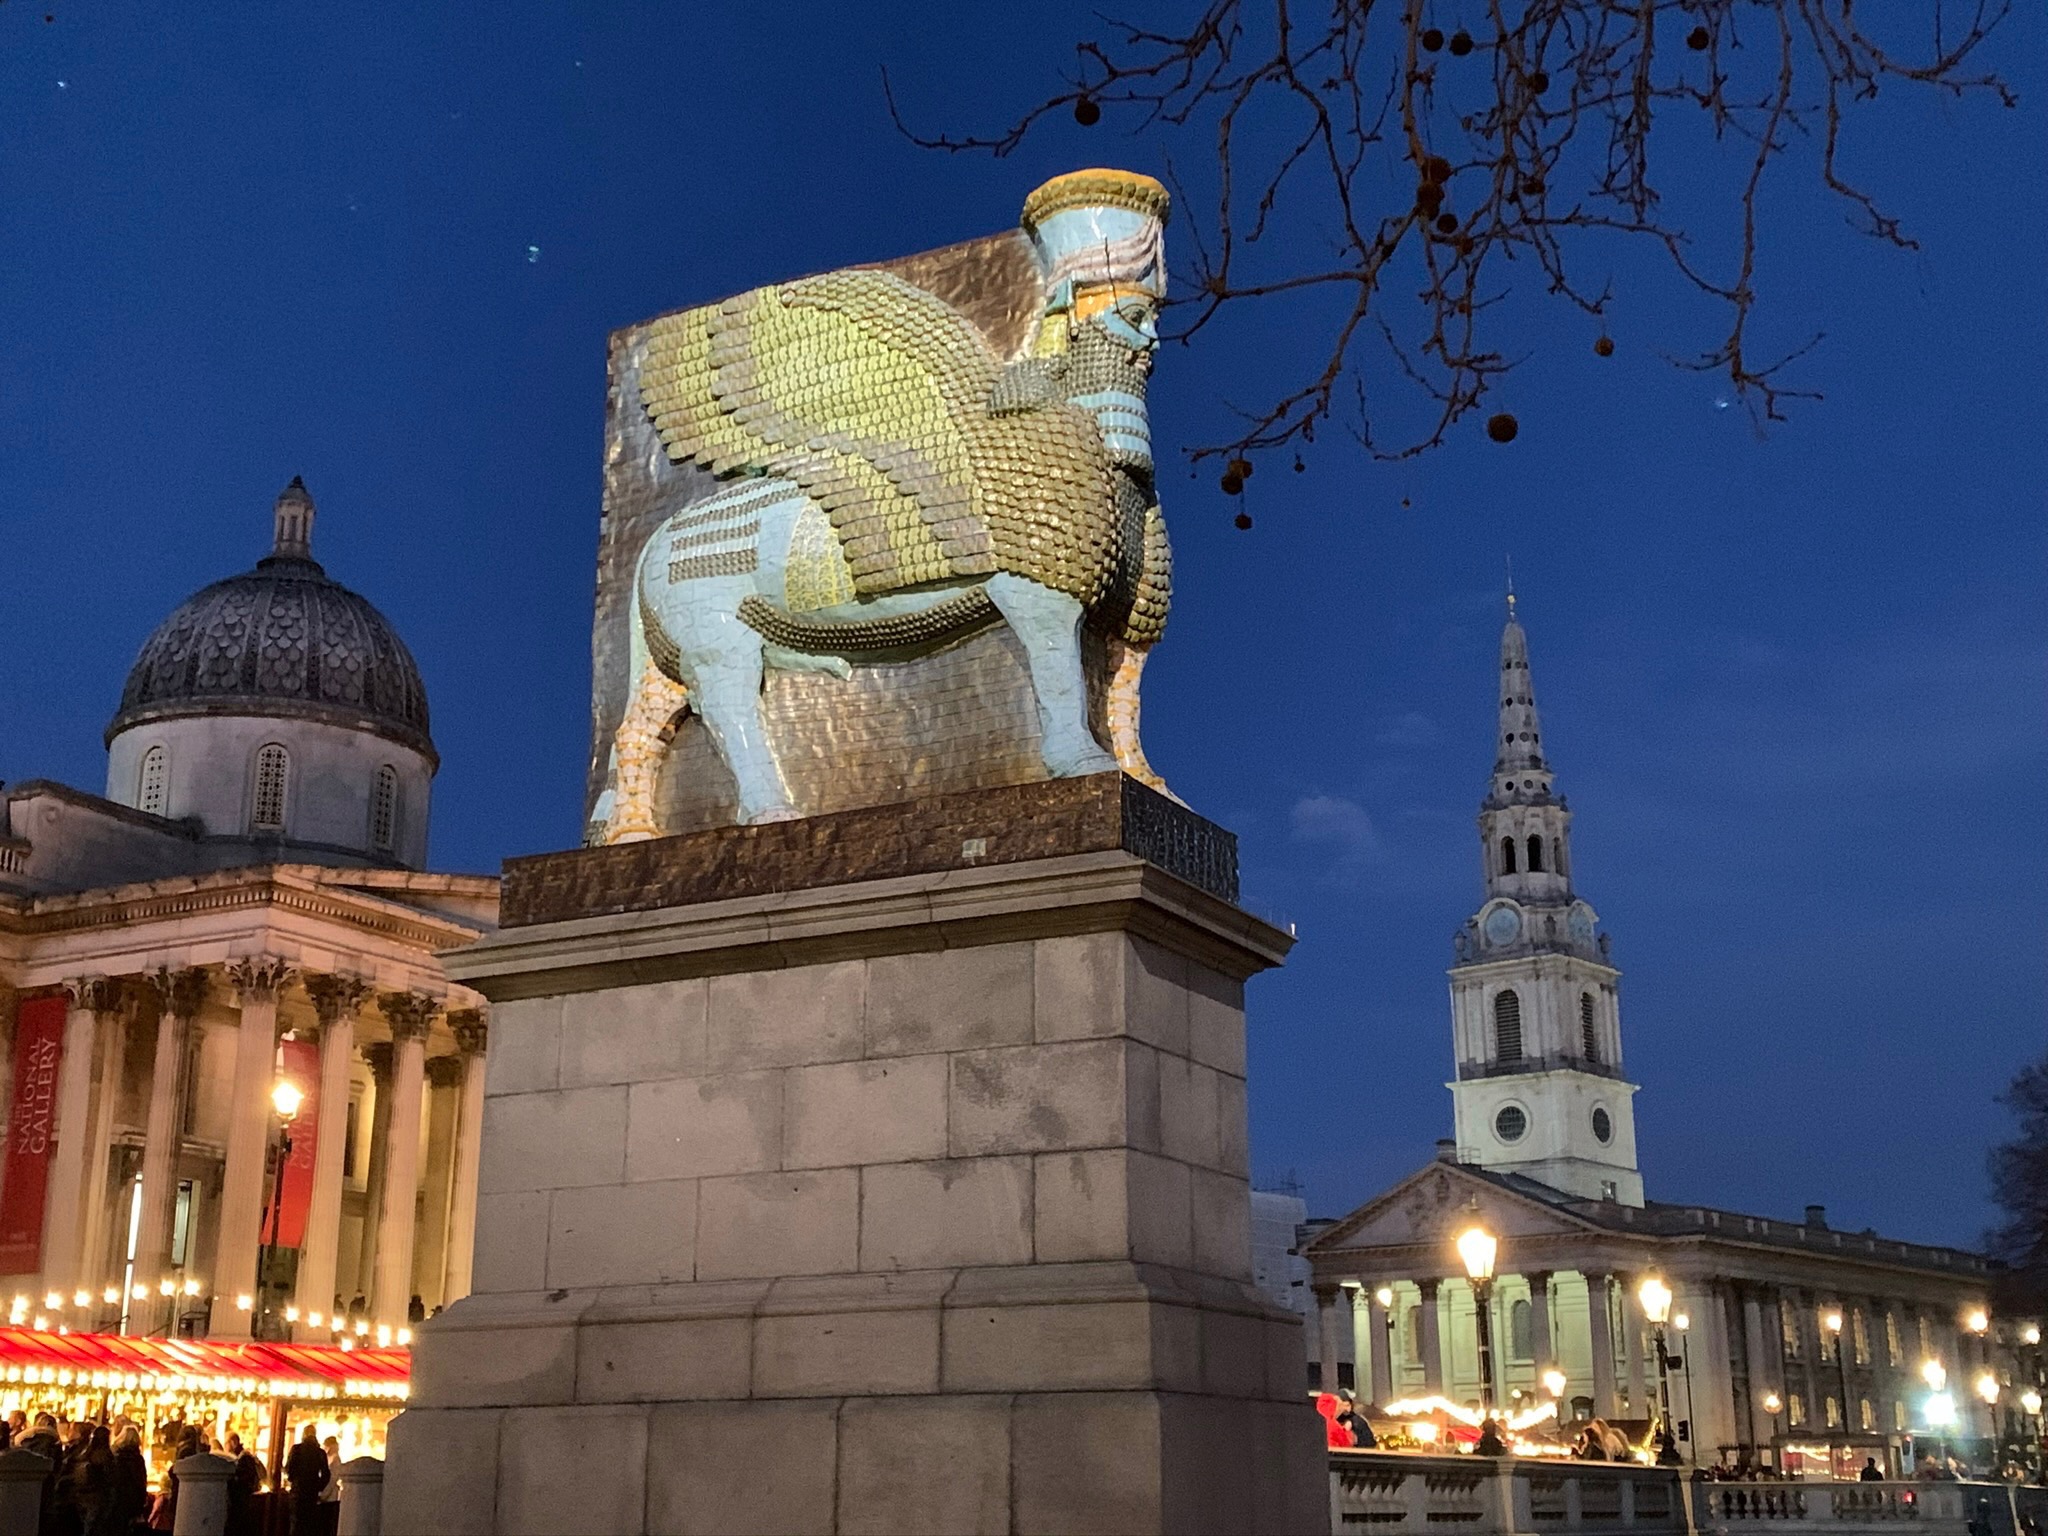 Lamassu sculpture in London